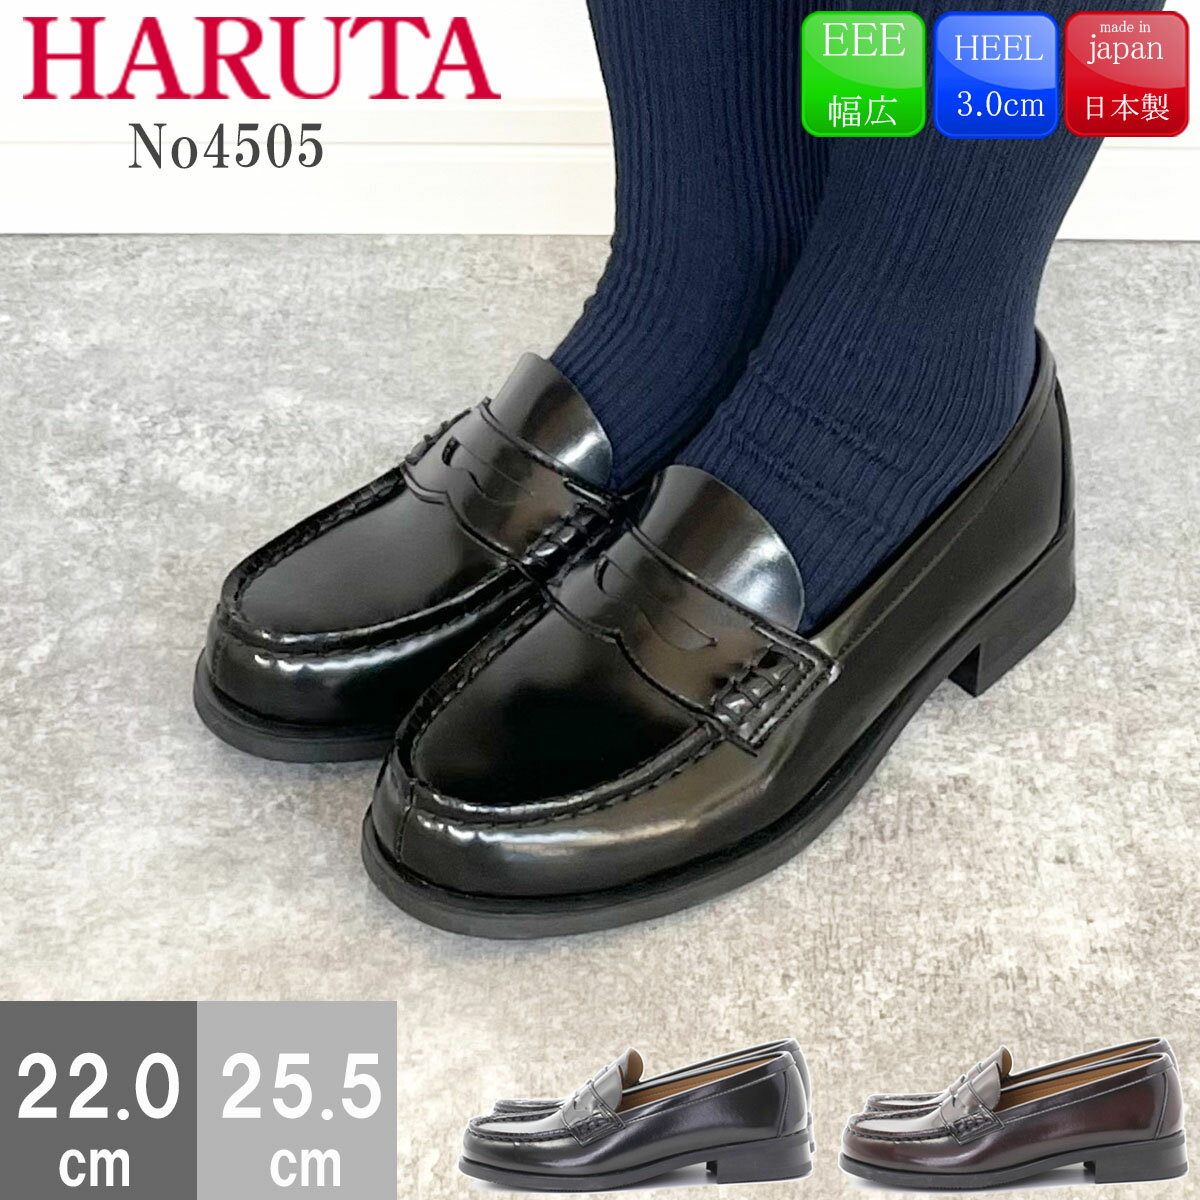 HARUTA ハルタ ローファー レディース 学生 靴 通学 スクールローファー日本製 ローヒール 女性 高校生 3E 47-4505